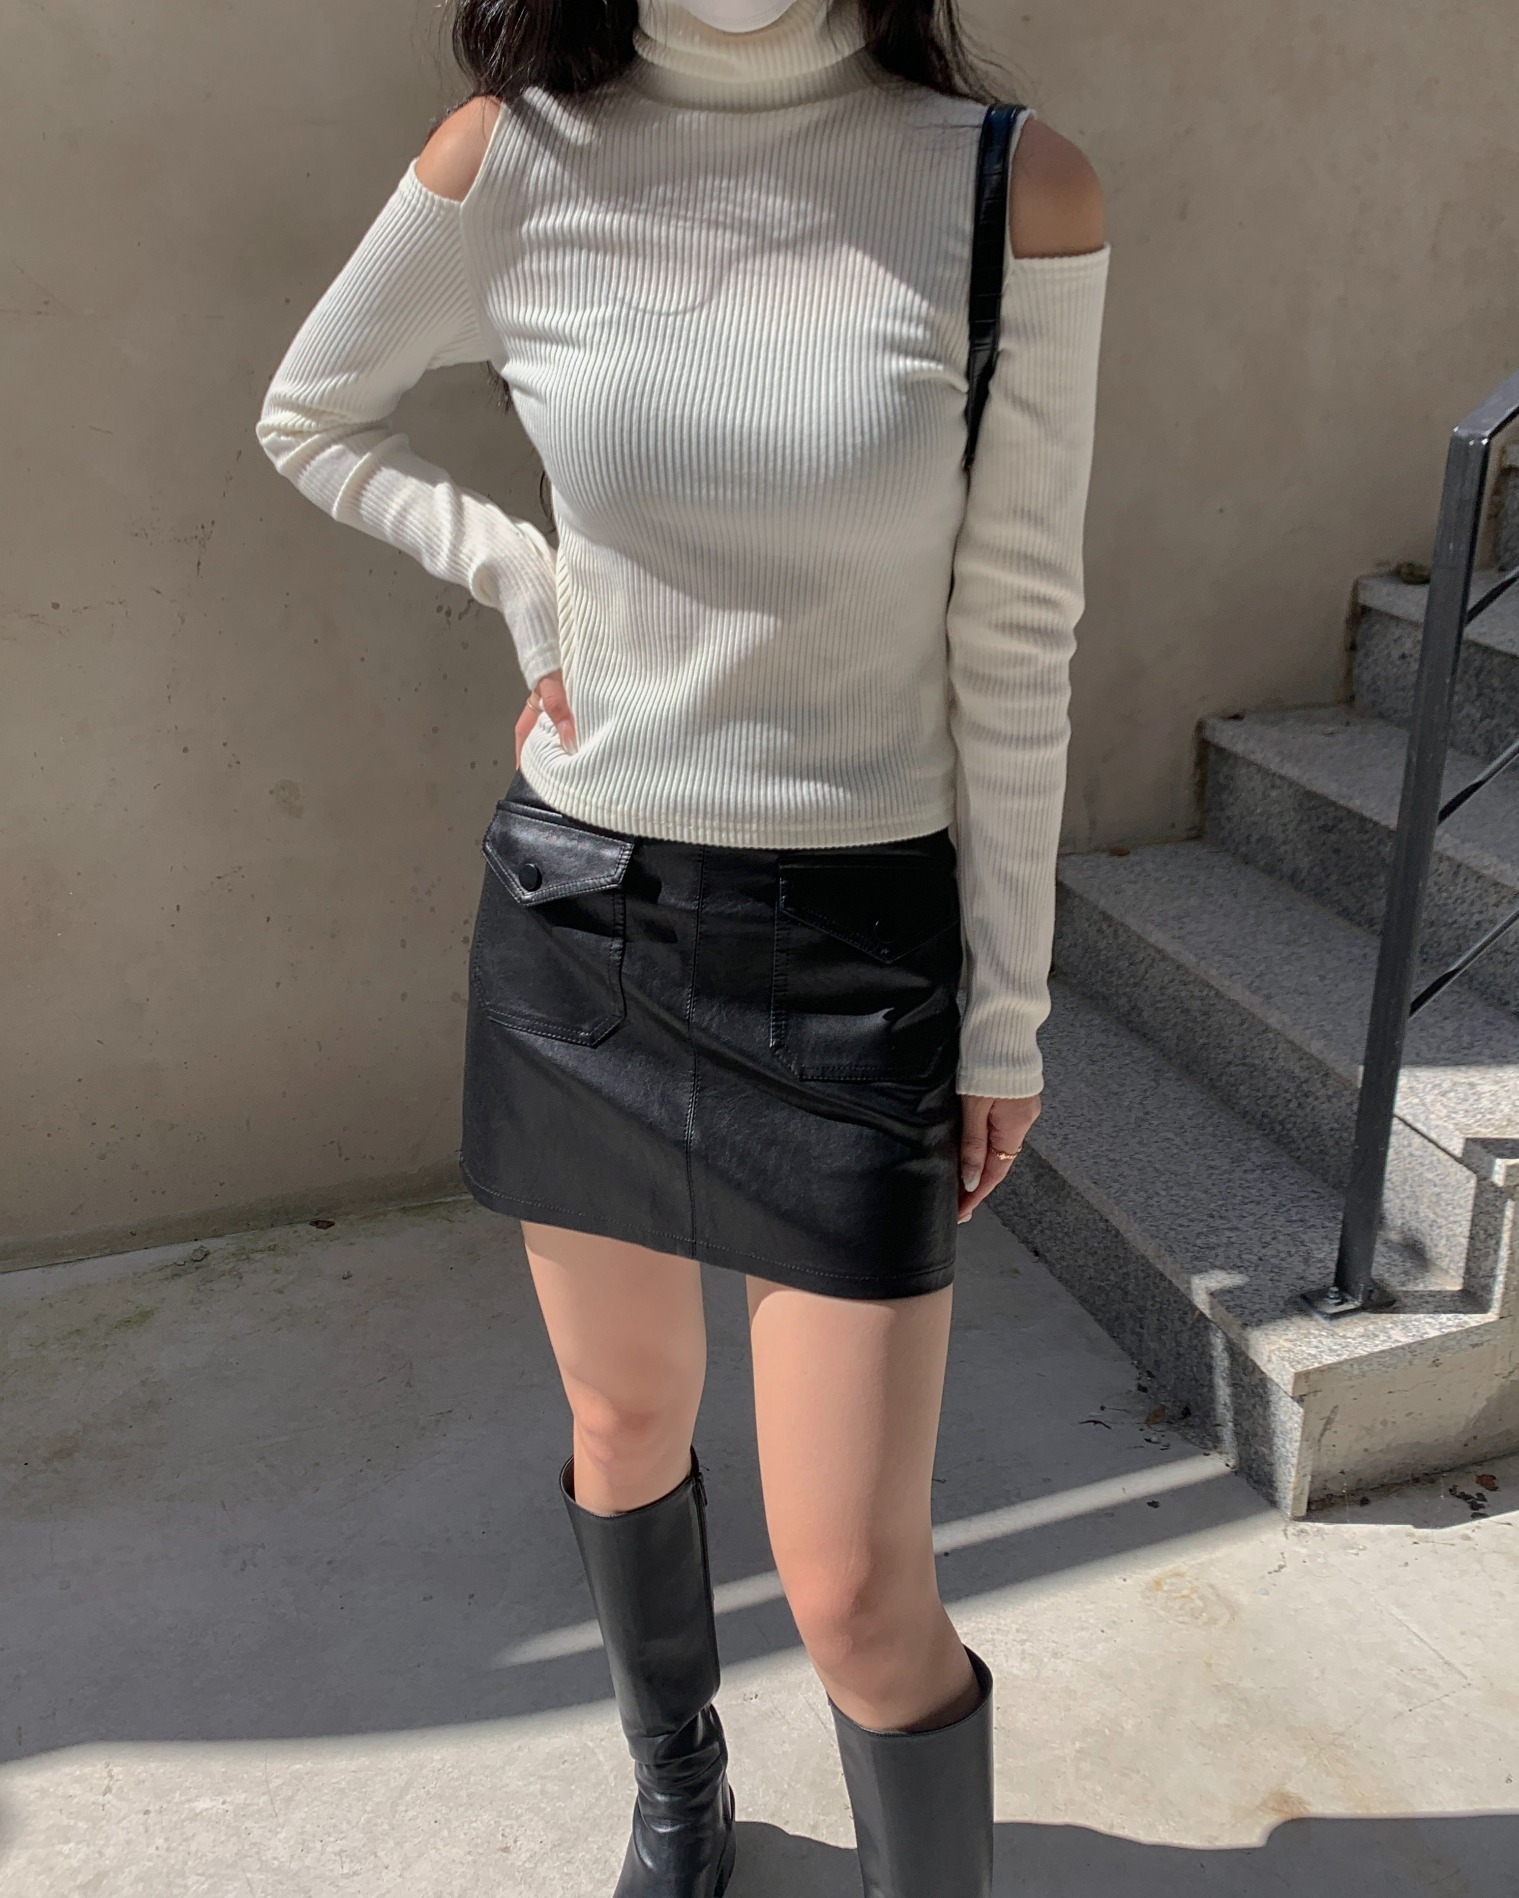 Pocket leather skirt